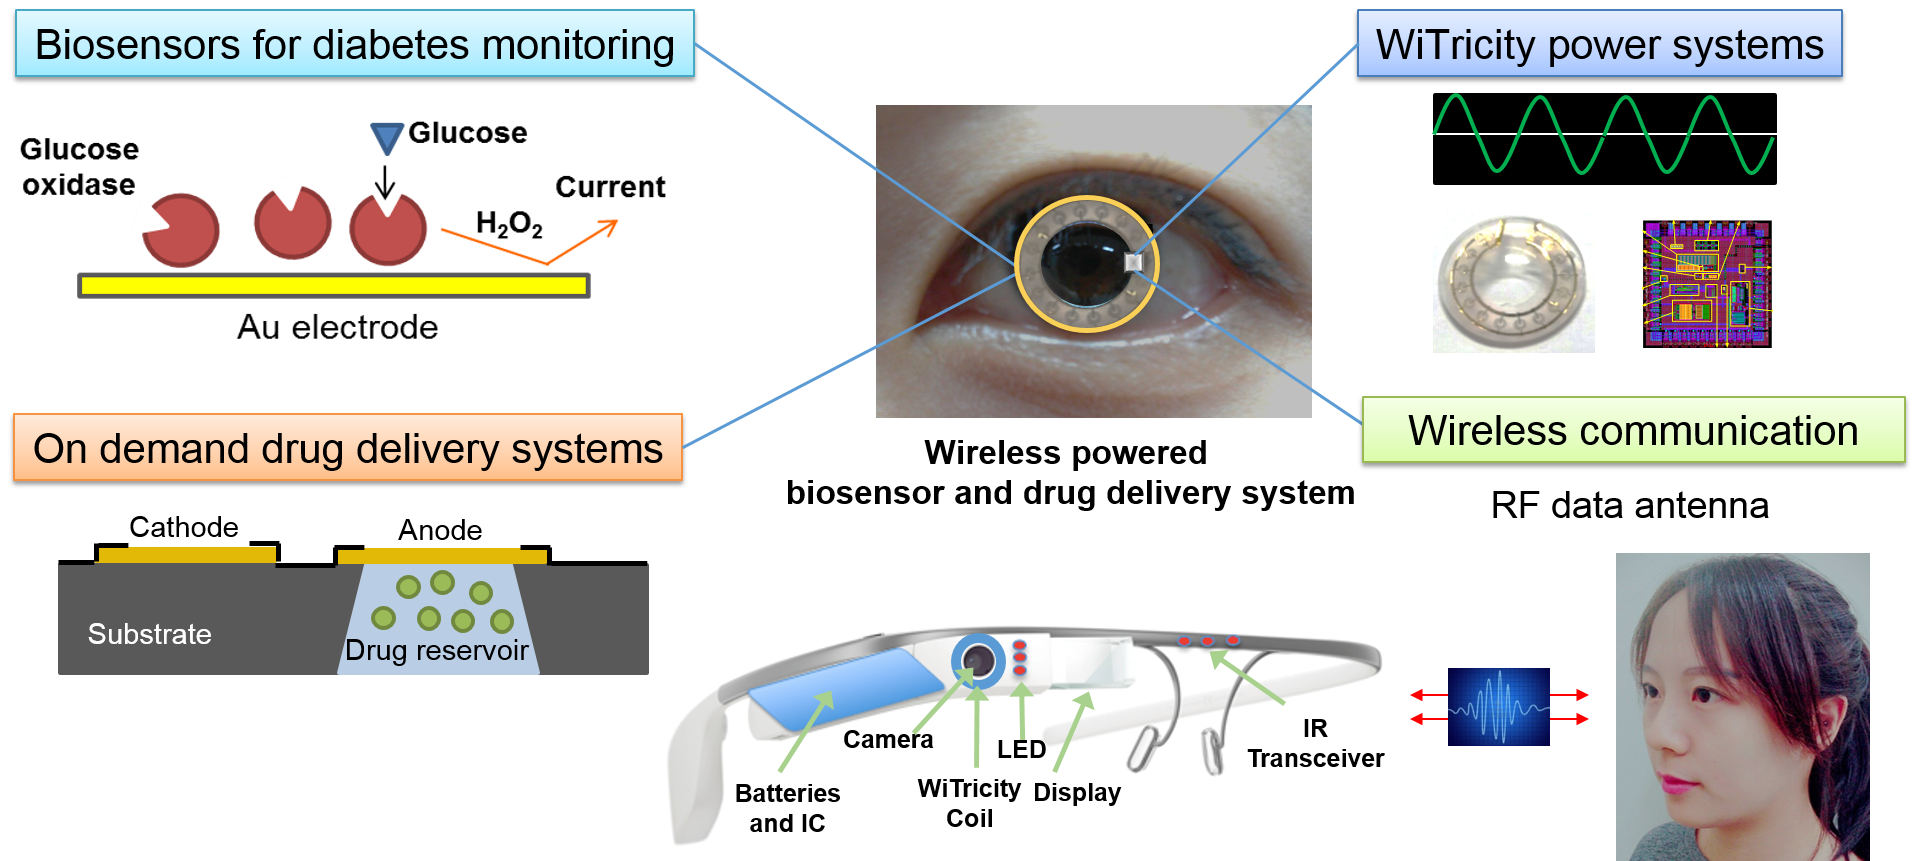 Contact lens/eyeglass system monitors blood sugar, dispenses drugs